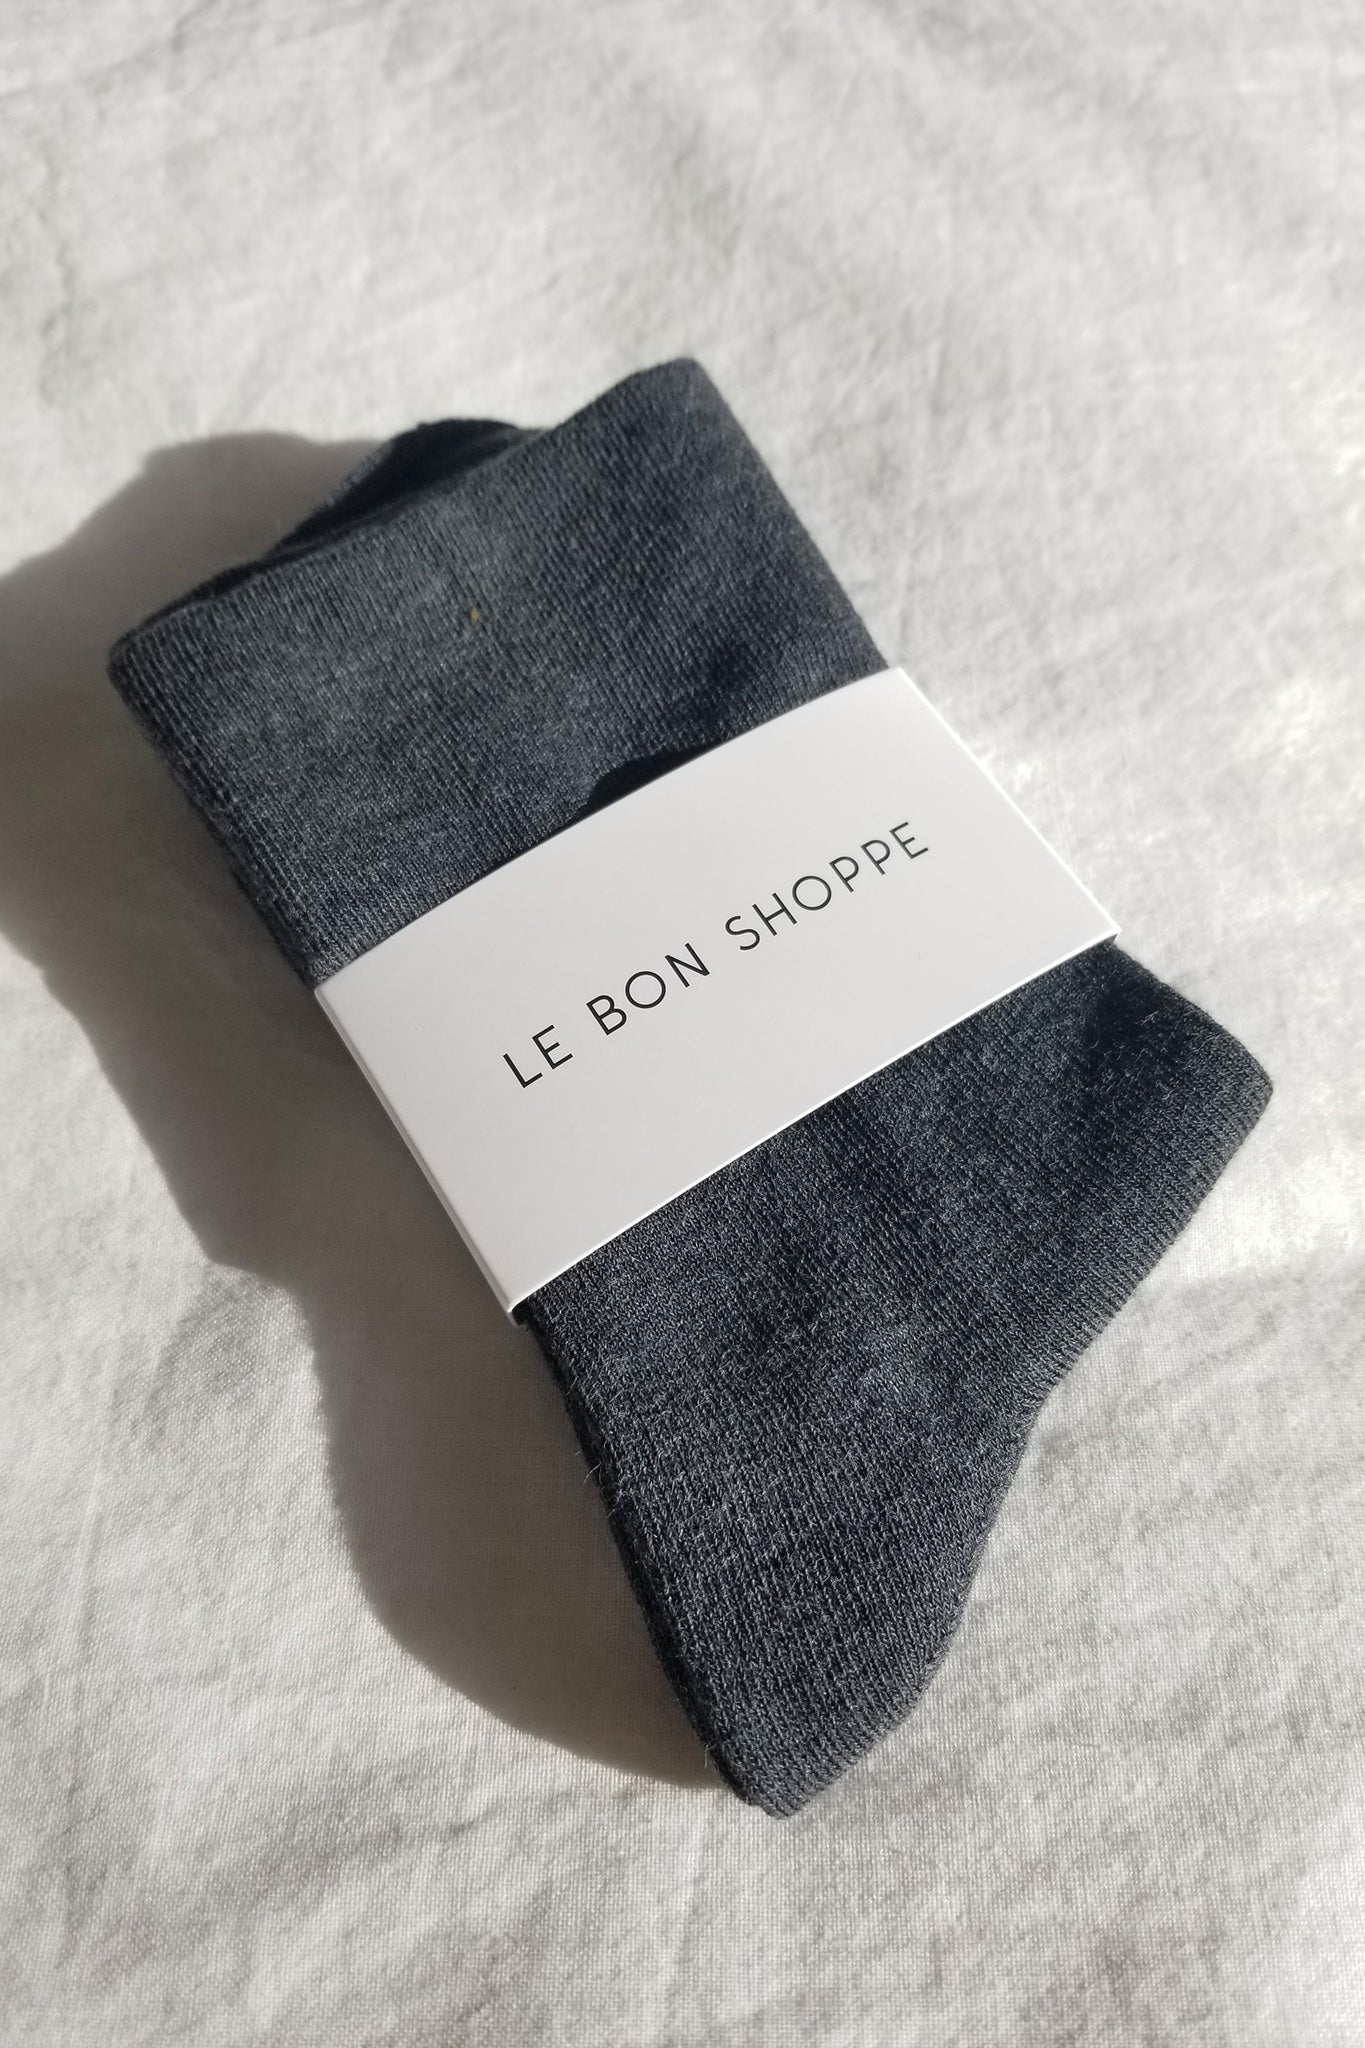    Le-Bon-Shoppe-Sneaker-Socks-Ht-Black